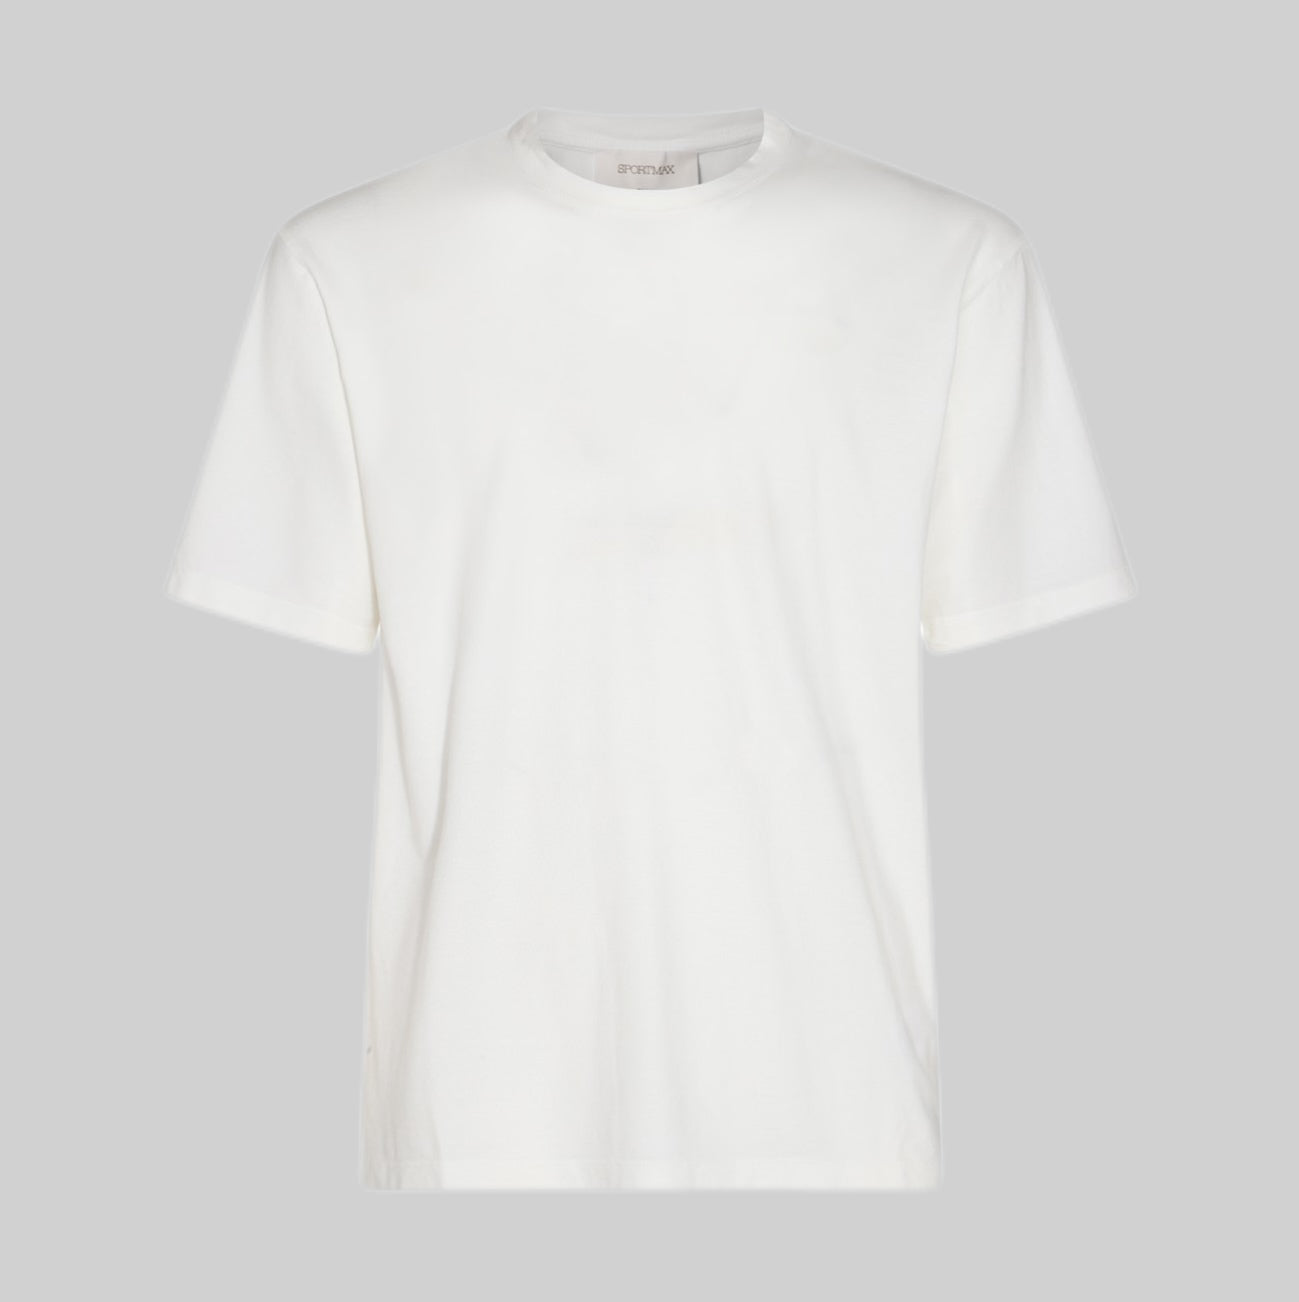 PIACENZA CASHMERE t-shirt, men, frontside, white